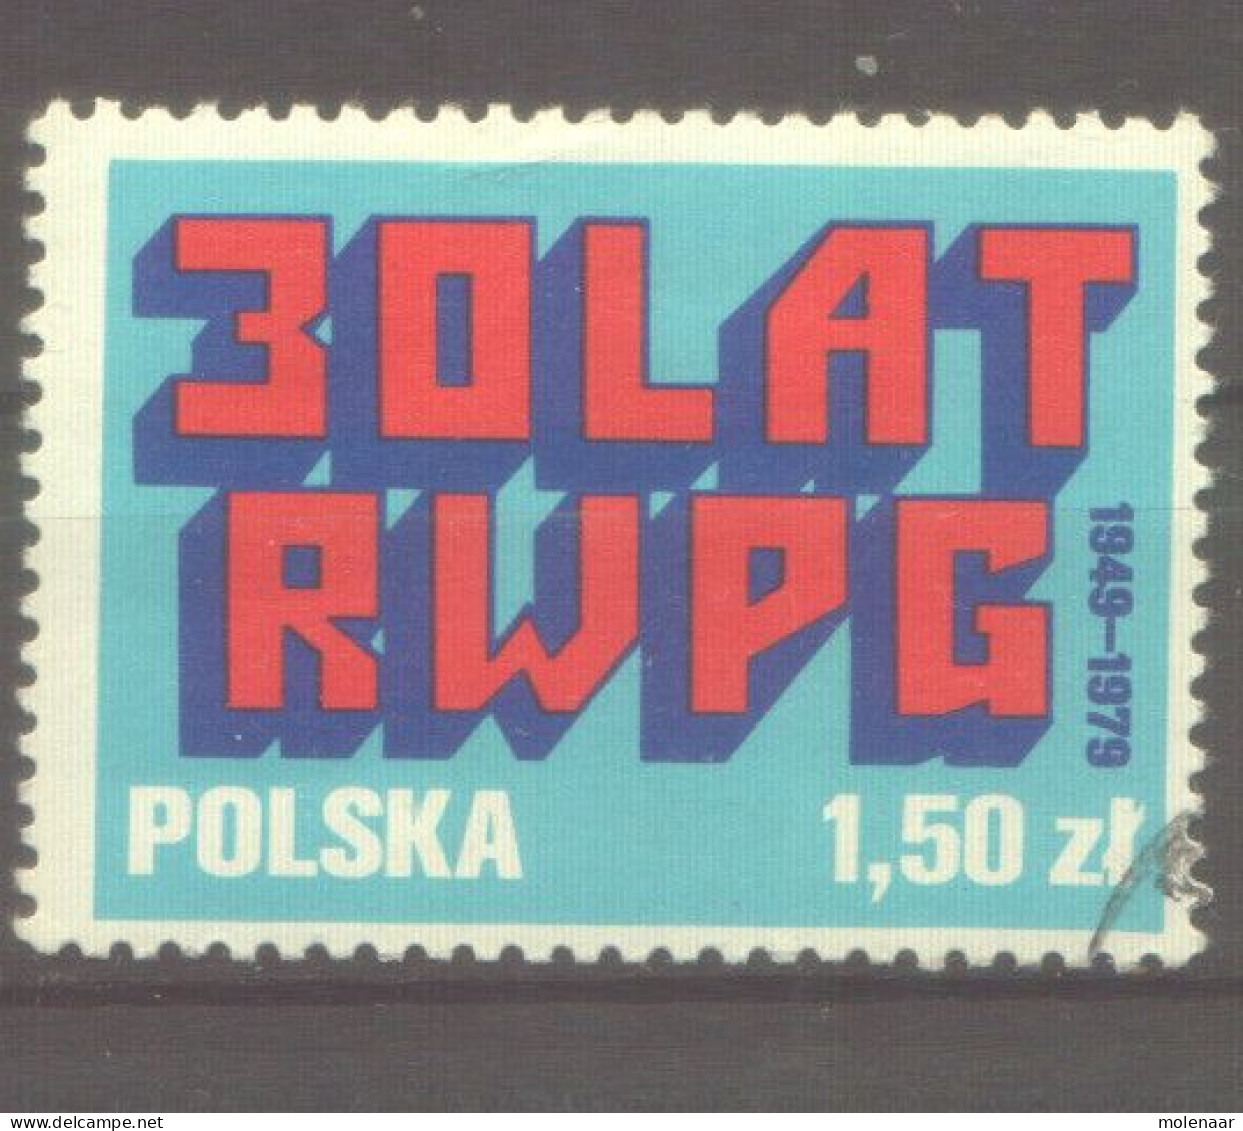 Postzegels > Europa > Polen > 1944-.... Republiek > 1971-80 > Gebruikt No. 2626  (1216612) - Gebraucht